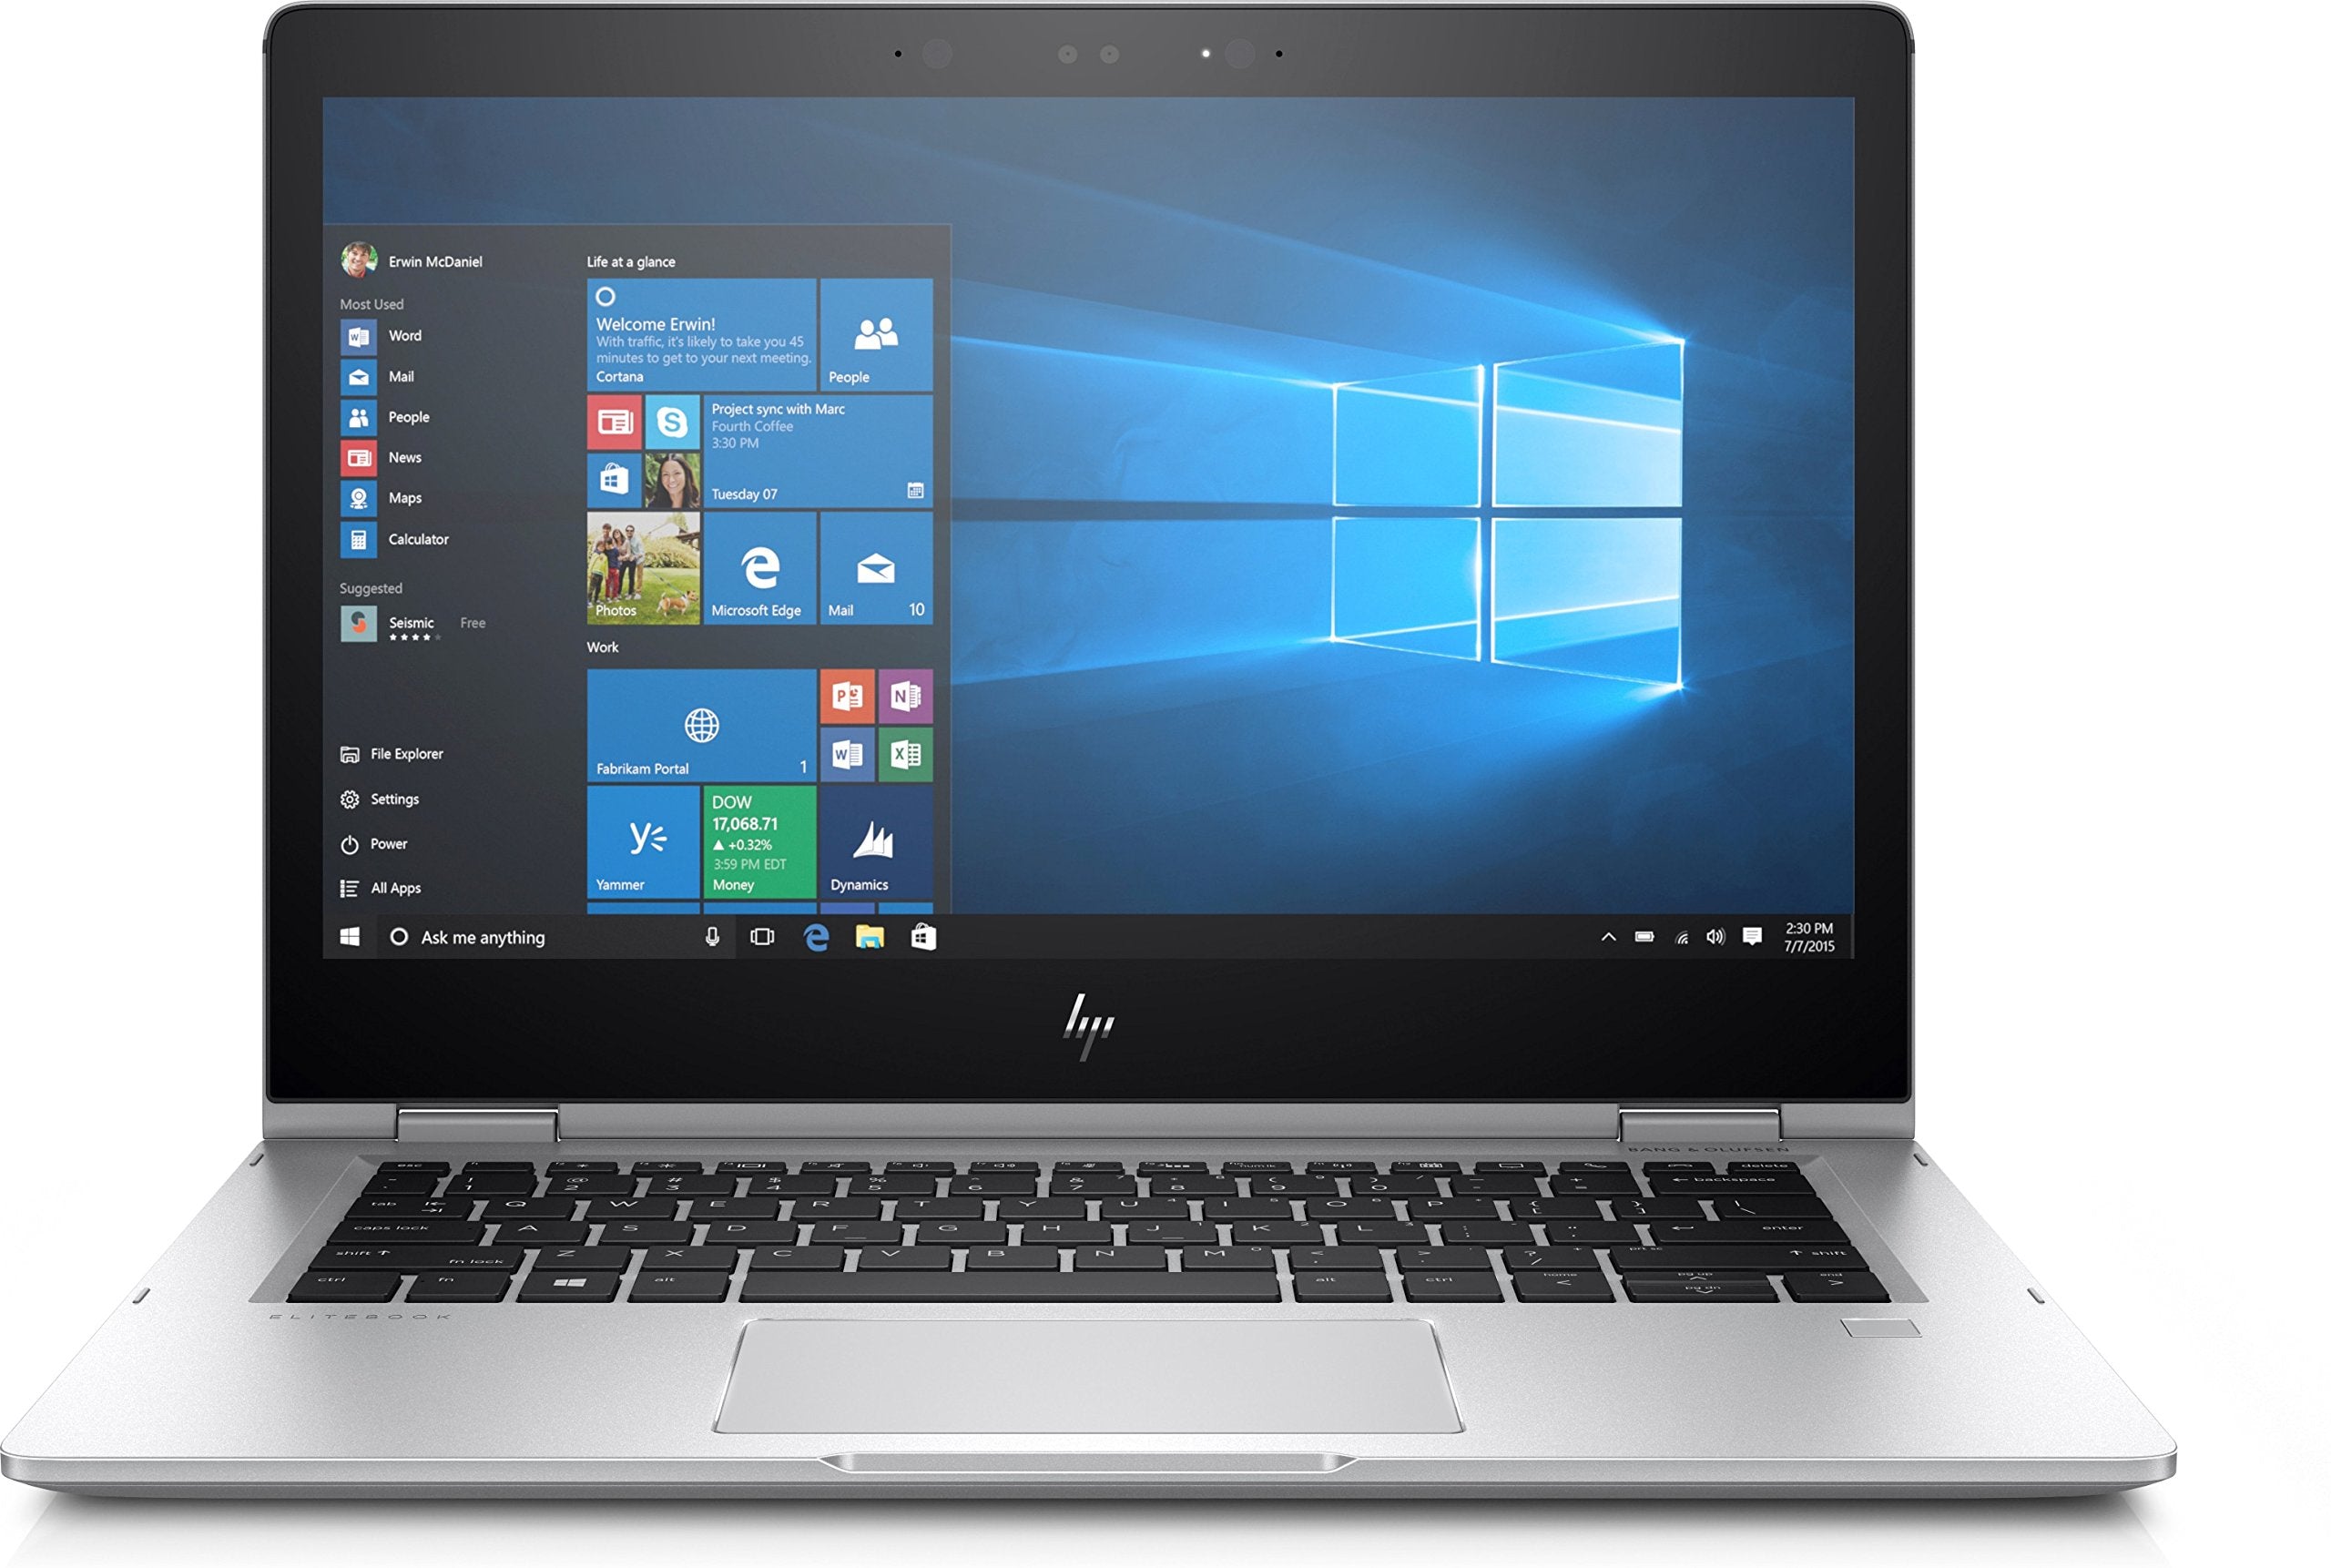 HP EliteBook x360 1030 G2, 2-in-1 Touchscreen Laptop – i7-7500U, 8GB DDR4, 1TB NVMe, Intel HD Graphics 620, Fingerprint & Smart Card Reader, WIFI 5 & BT 4.2, Backlit Keys, Windows 10 Pro